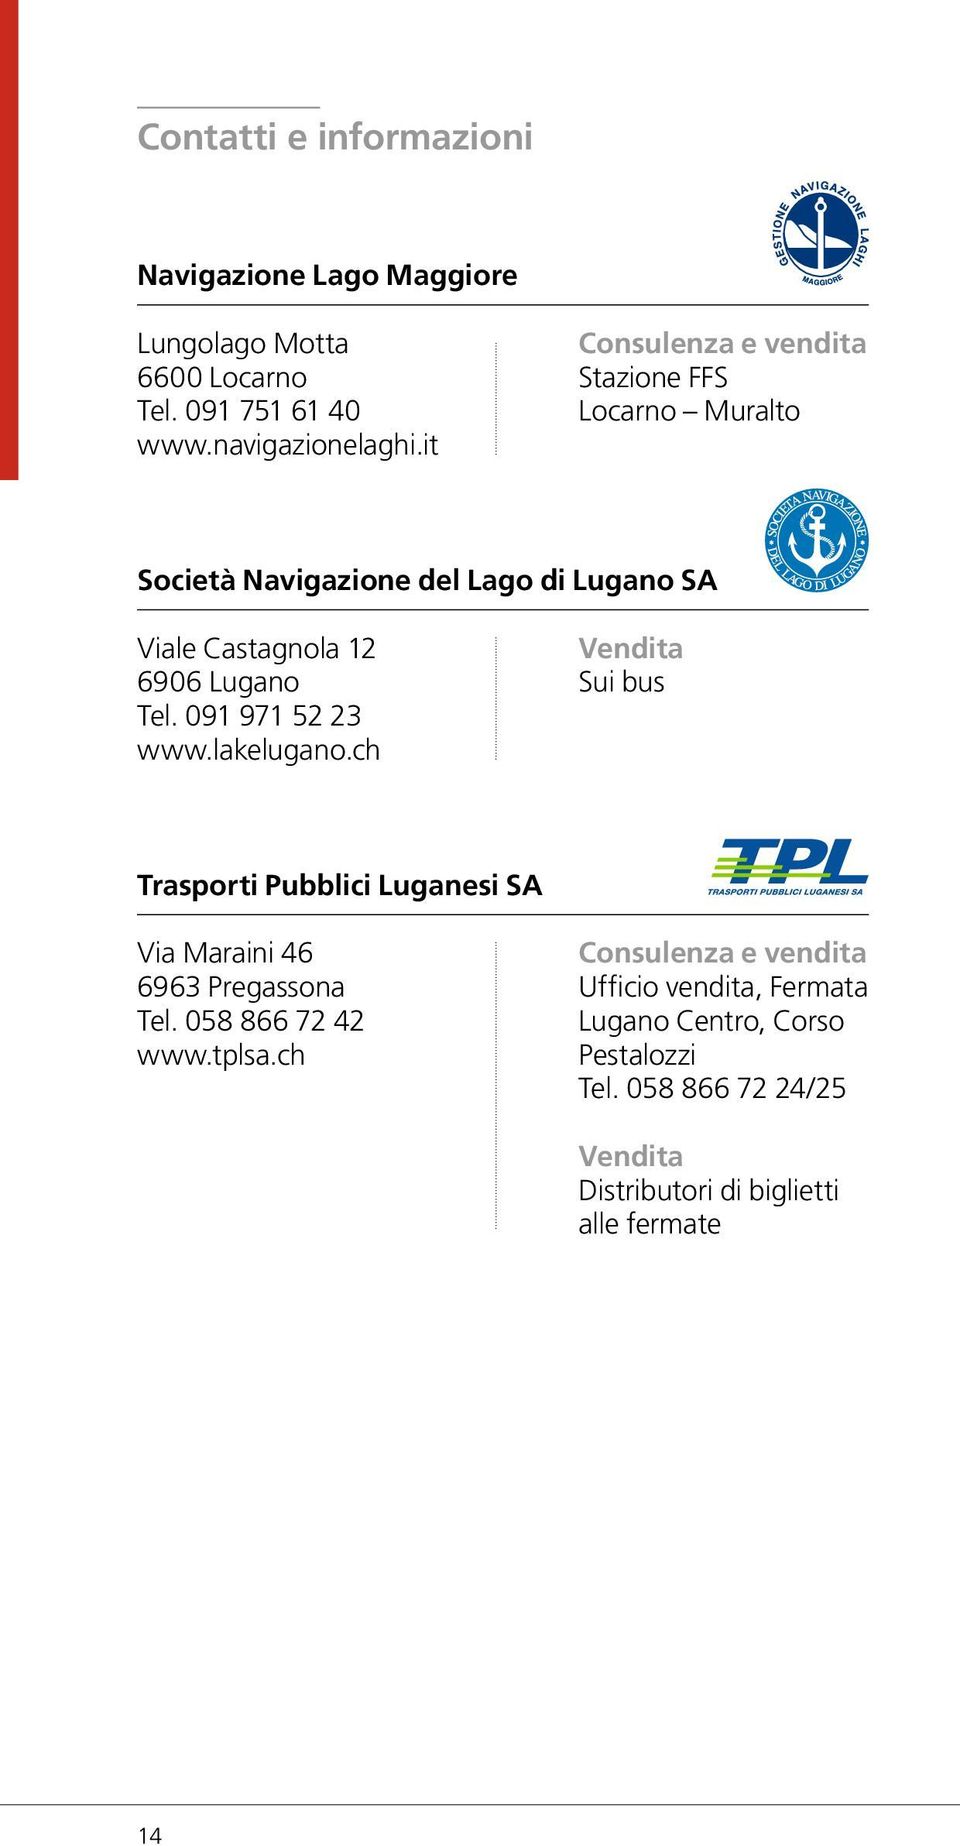 091 971 52 23 www.lakelugano.ch Vendita Sui bus Trasporti Pubblici Luganesi SA Via Maraini 46 6963 Pregassona Tel. 058 866 72 42 www.